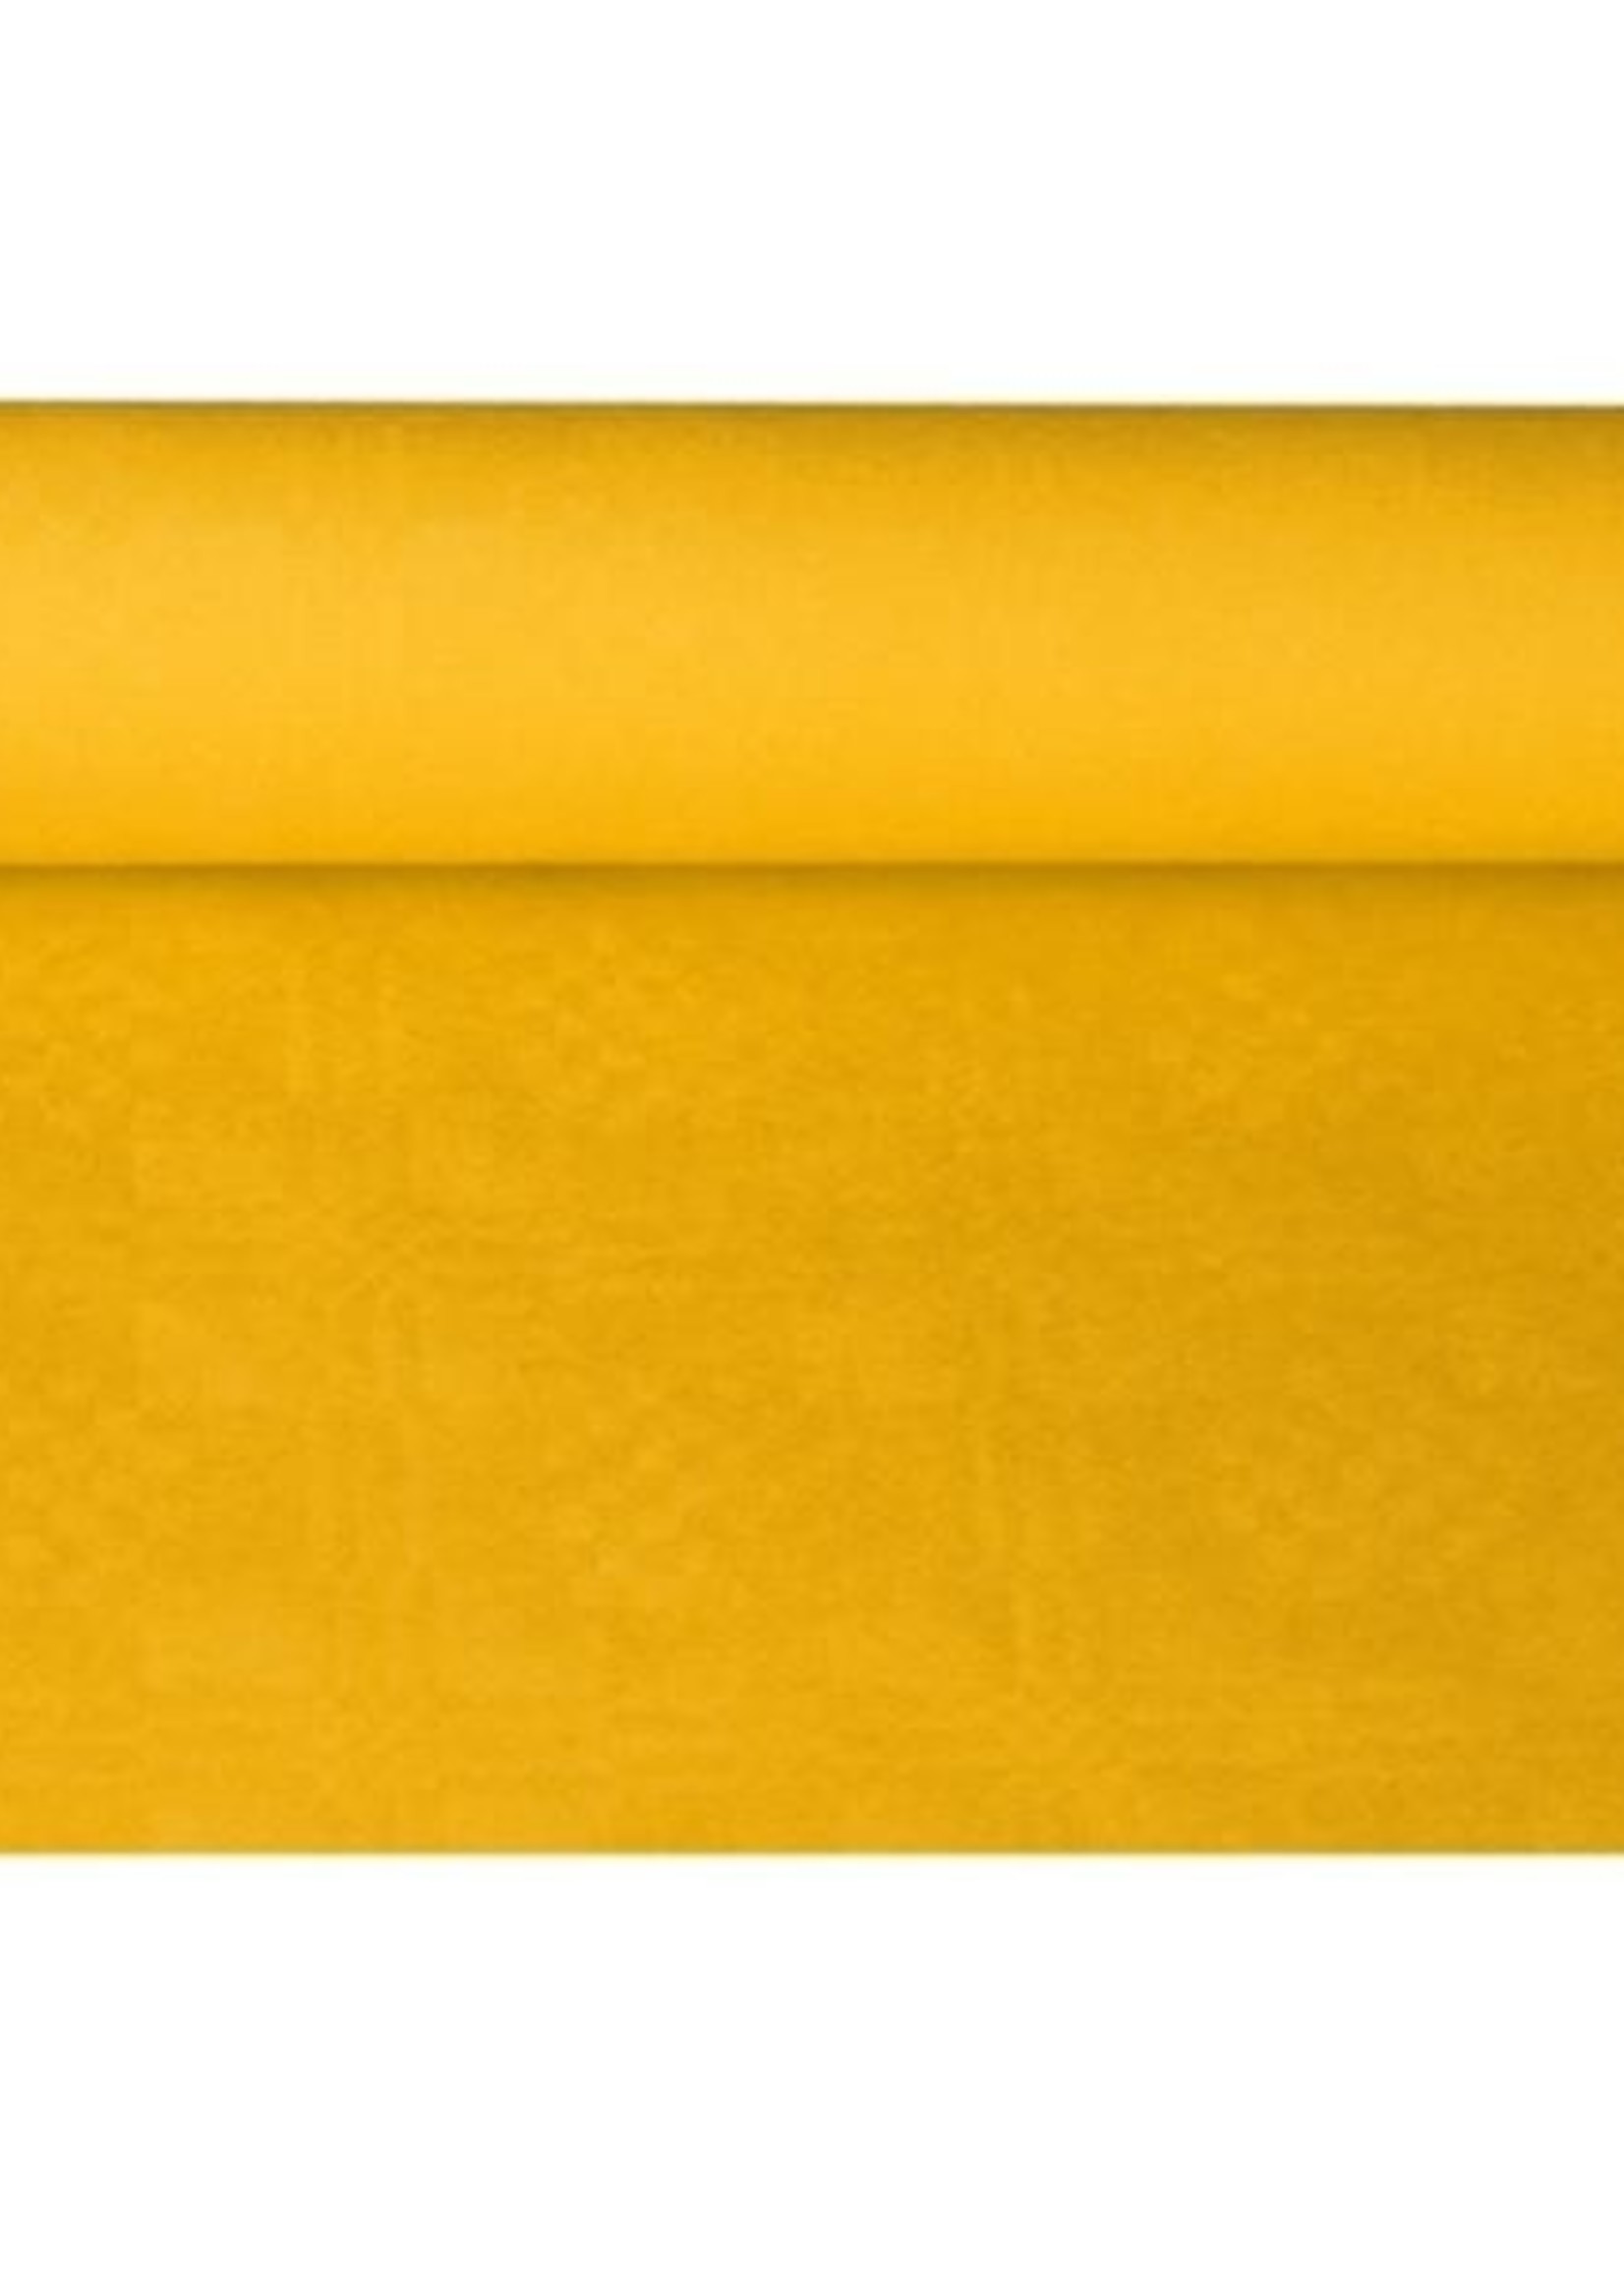 Damast tafelkleed papier ROL 120cmx8m geel